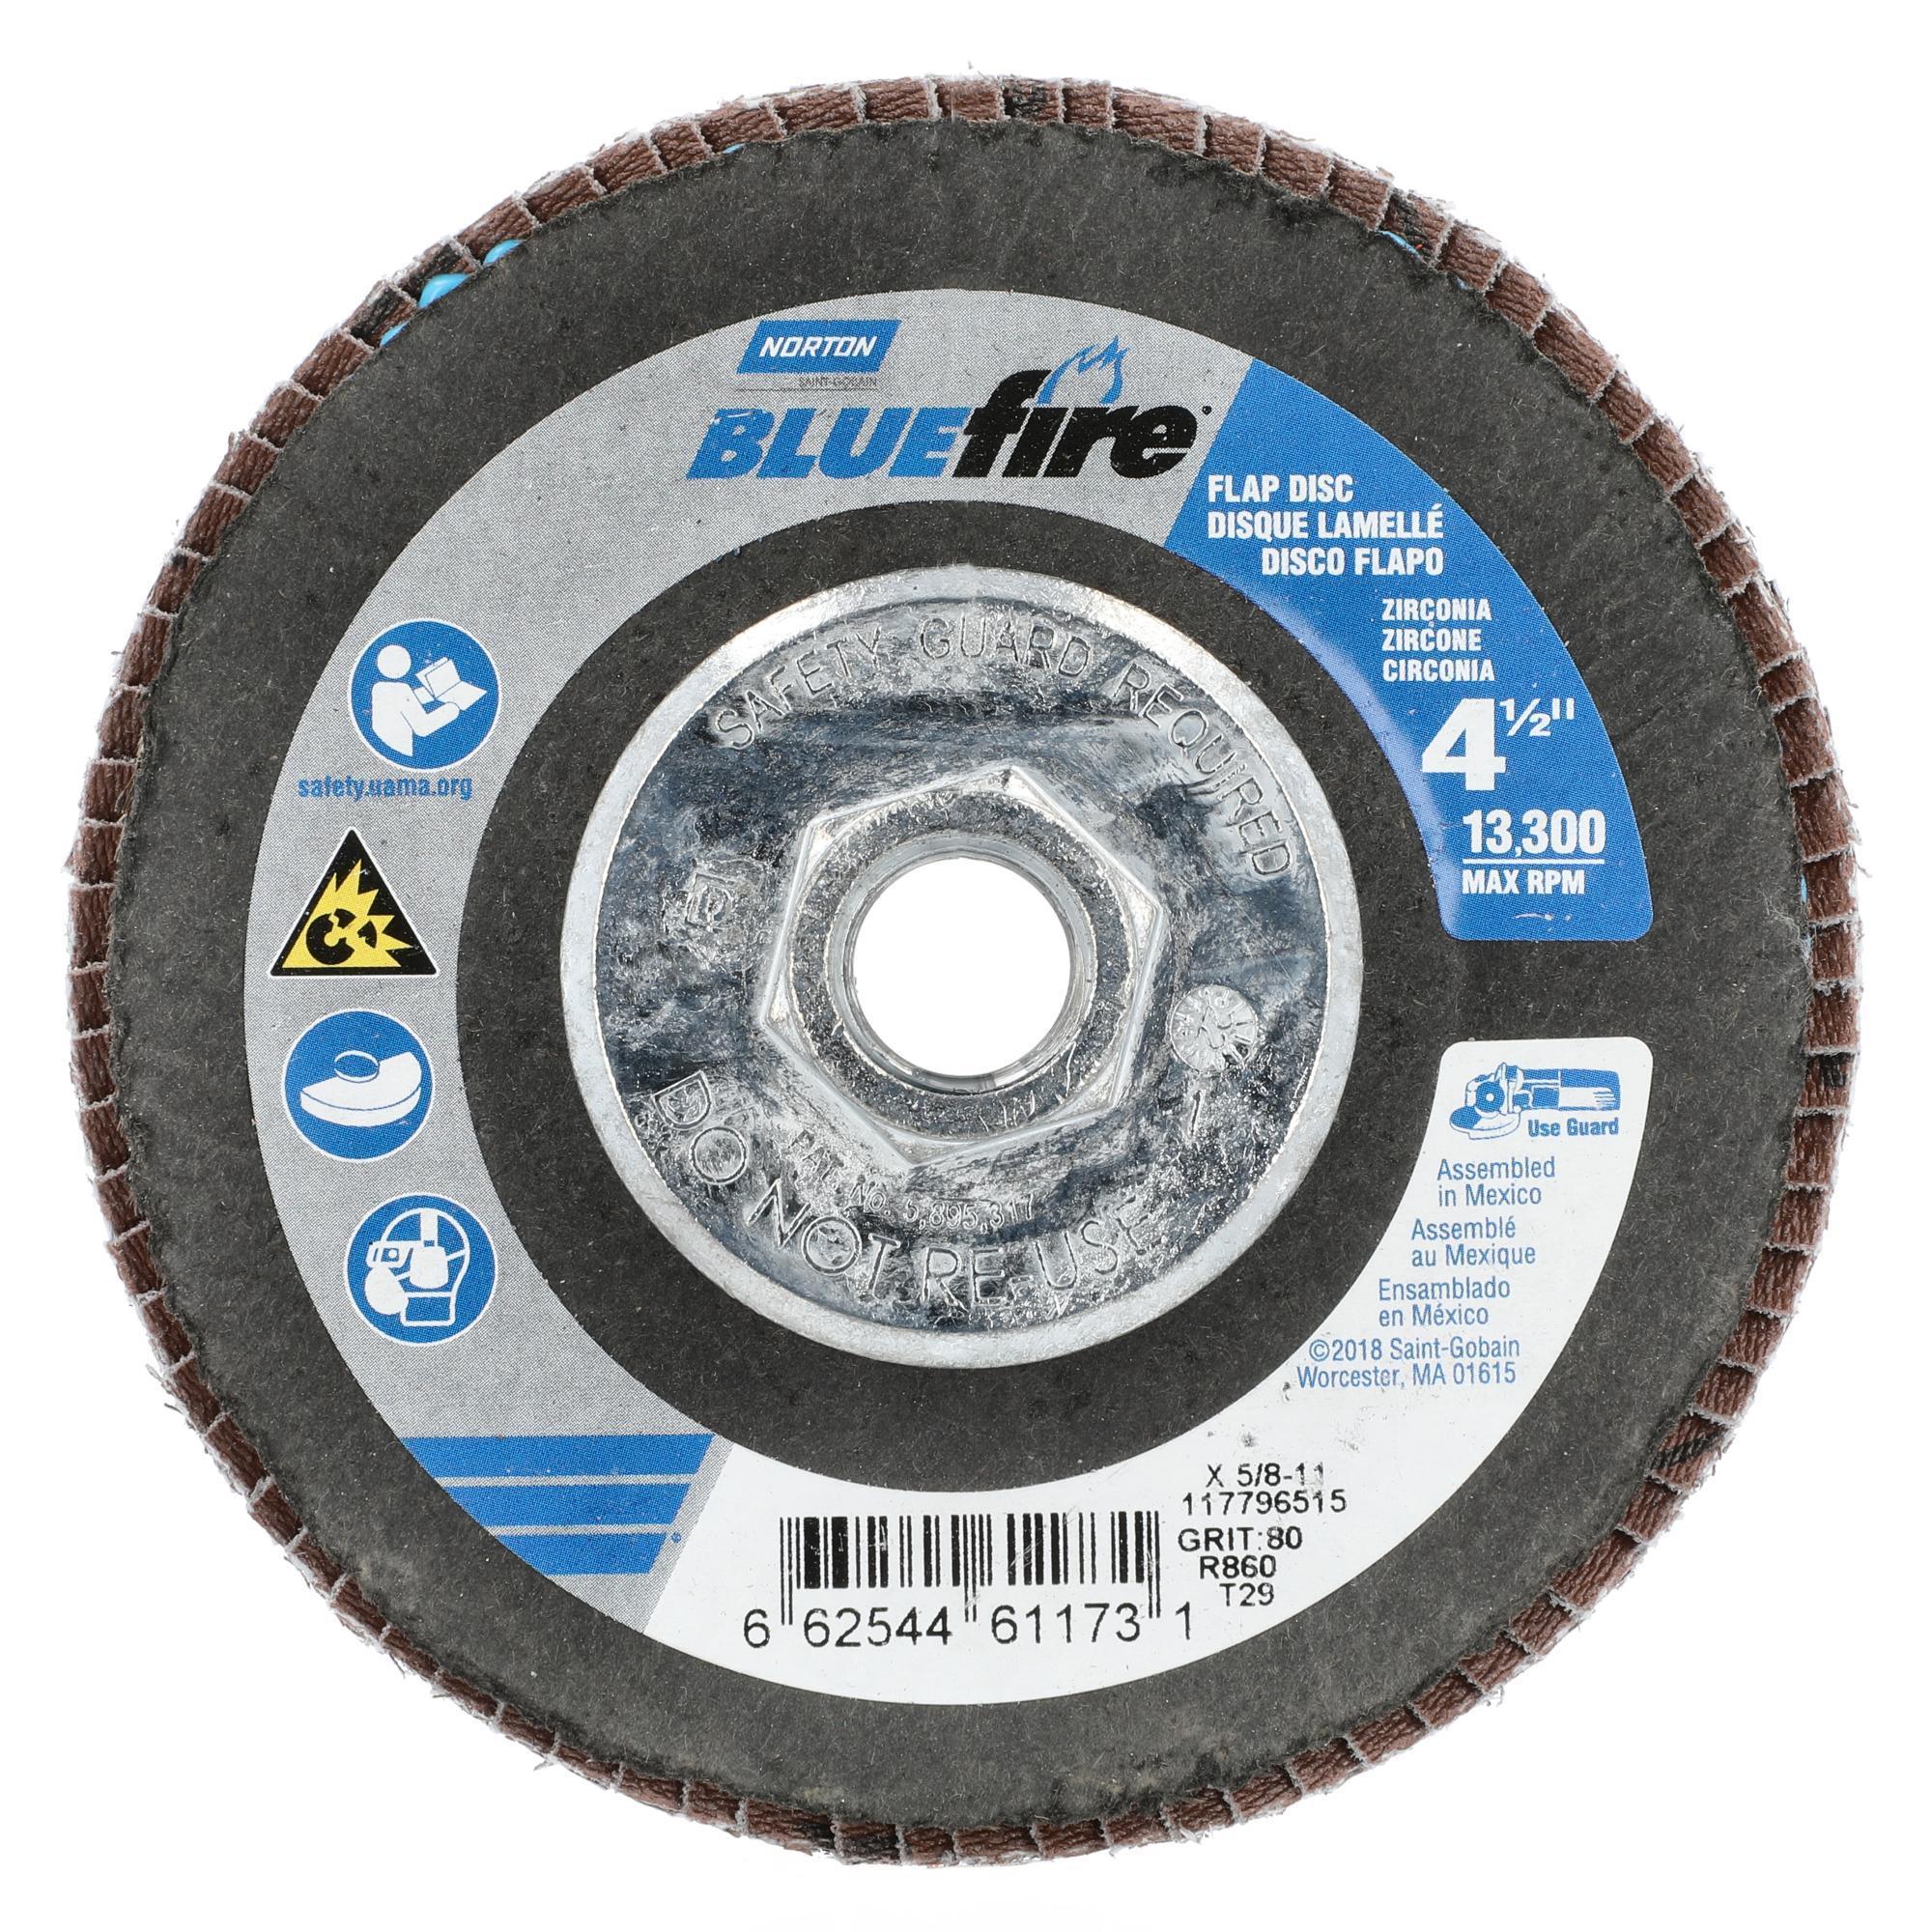 Norton BlueFire, Flap Disc 10-PK, 4-1/2x7/8 80 Grit, T29 Wheel Diameter 4.5 in, Arbor Size 7/8 Wheels (qty.) 10 Model 66254461173